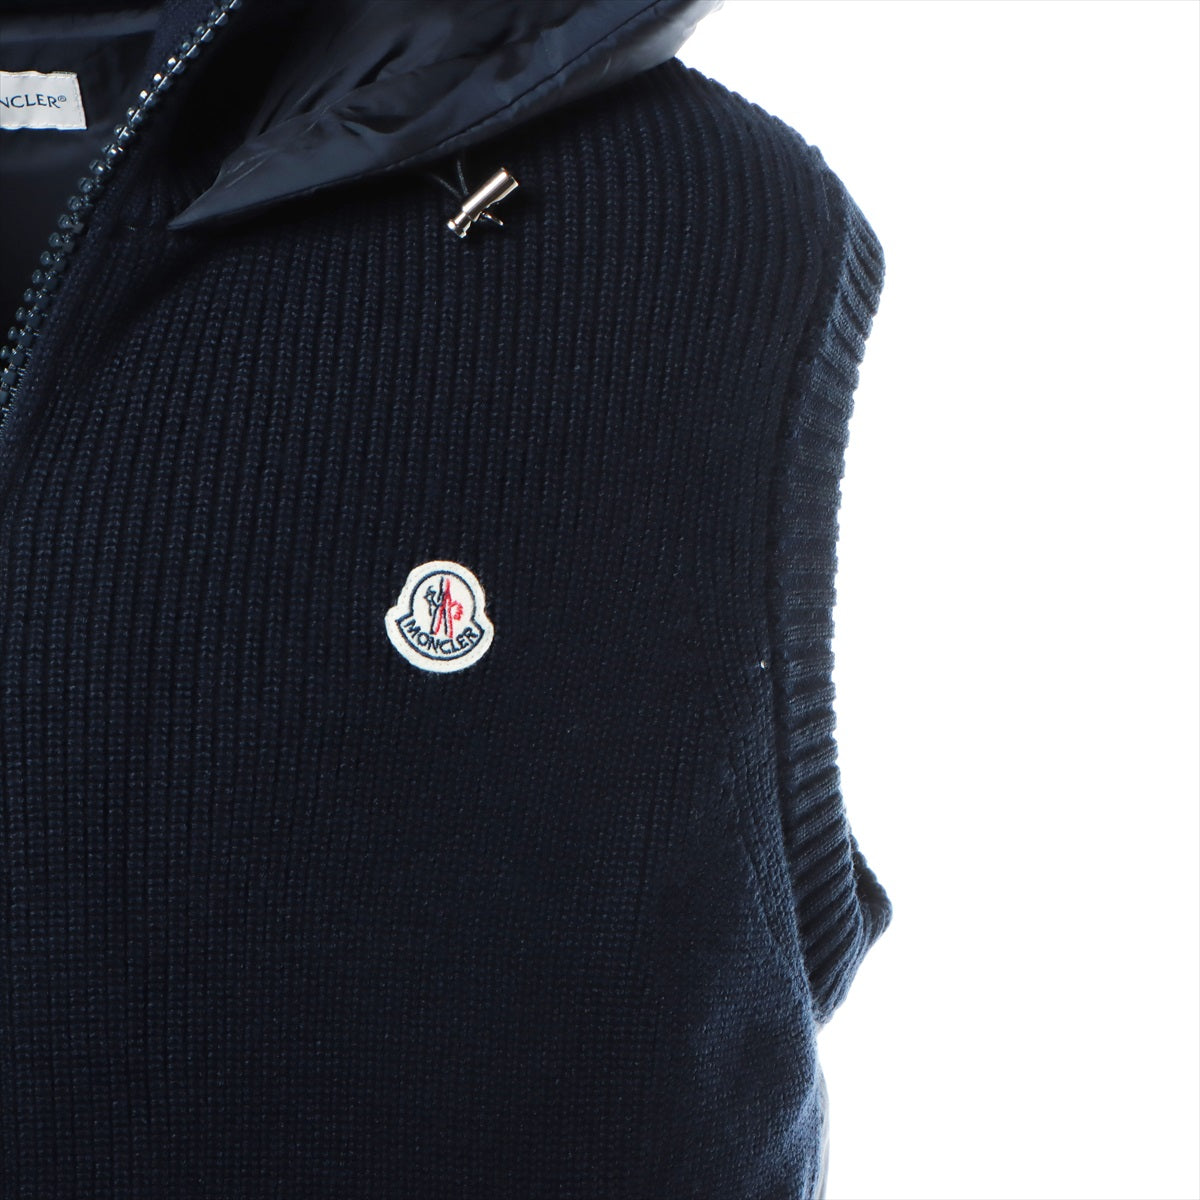 Moncler 16 years Wool & nylon Down vest XL Men's Navy blue  B20919413400 Switch knit